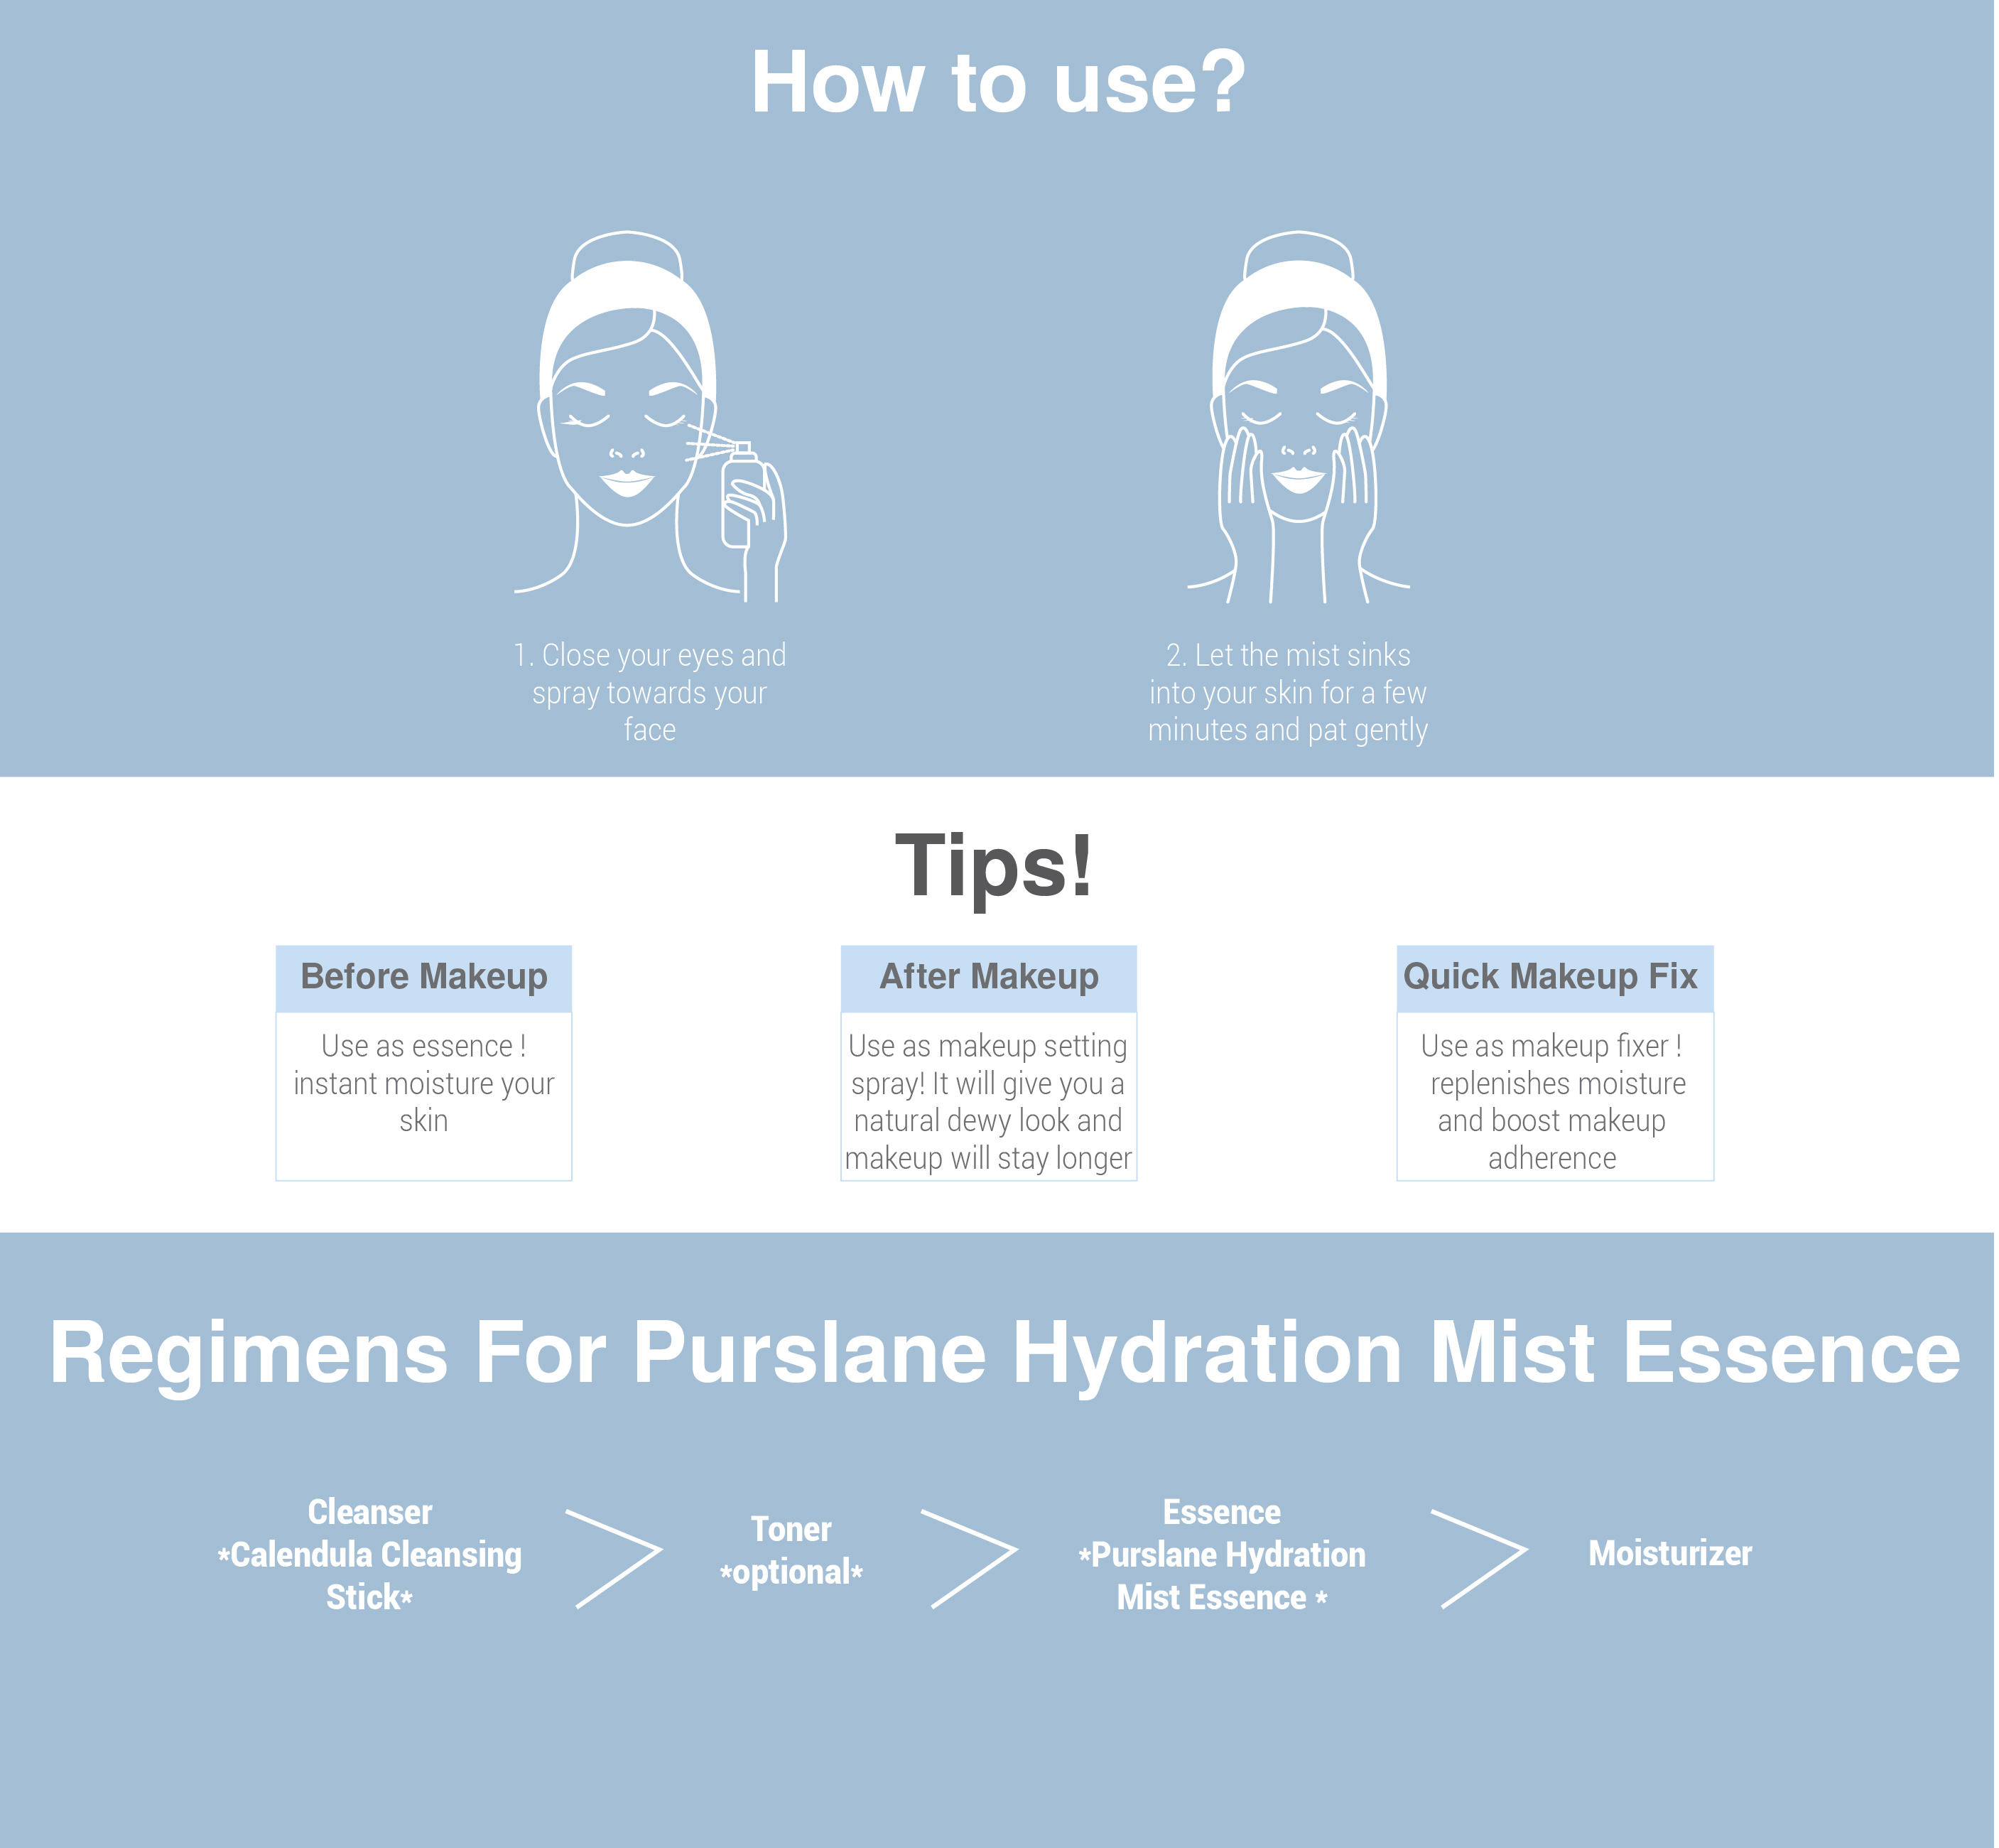 Purslane Hydration Mist Essence